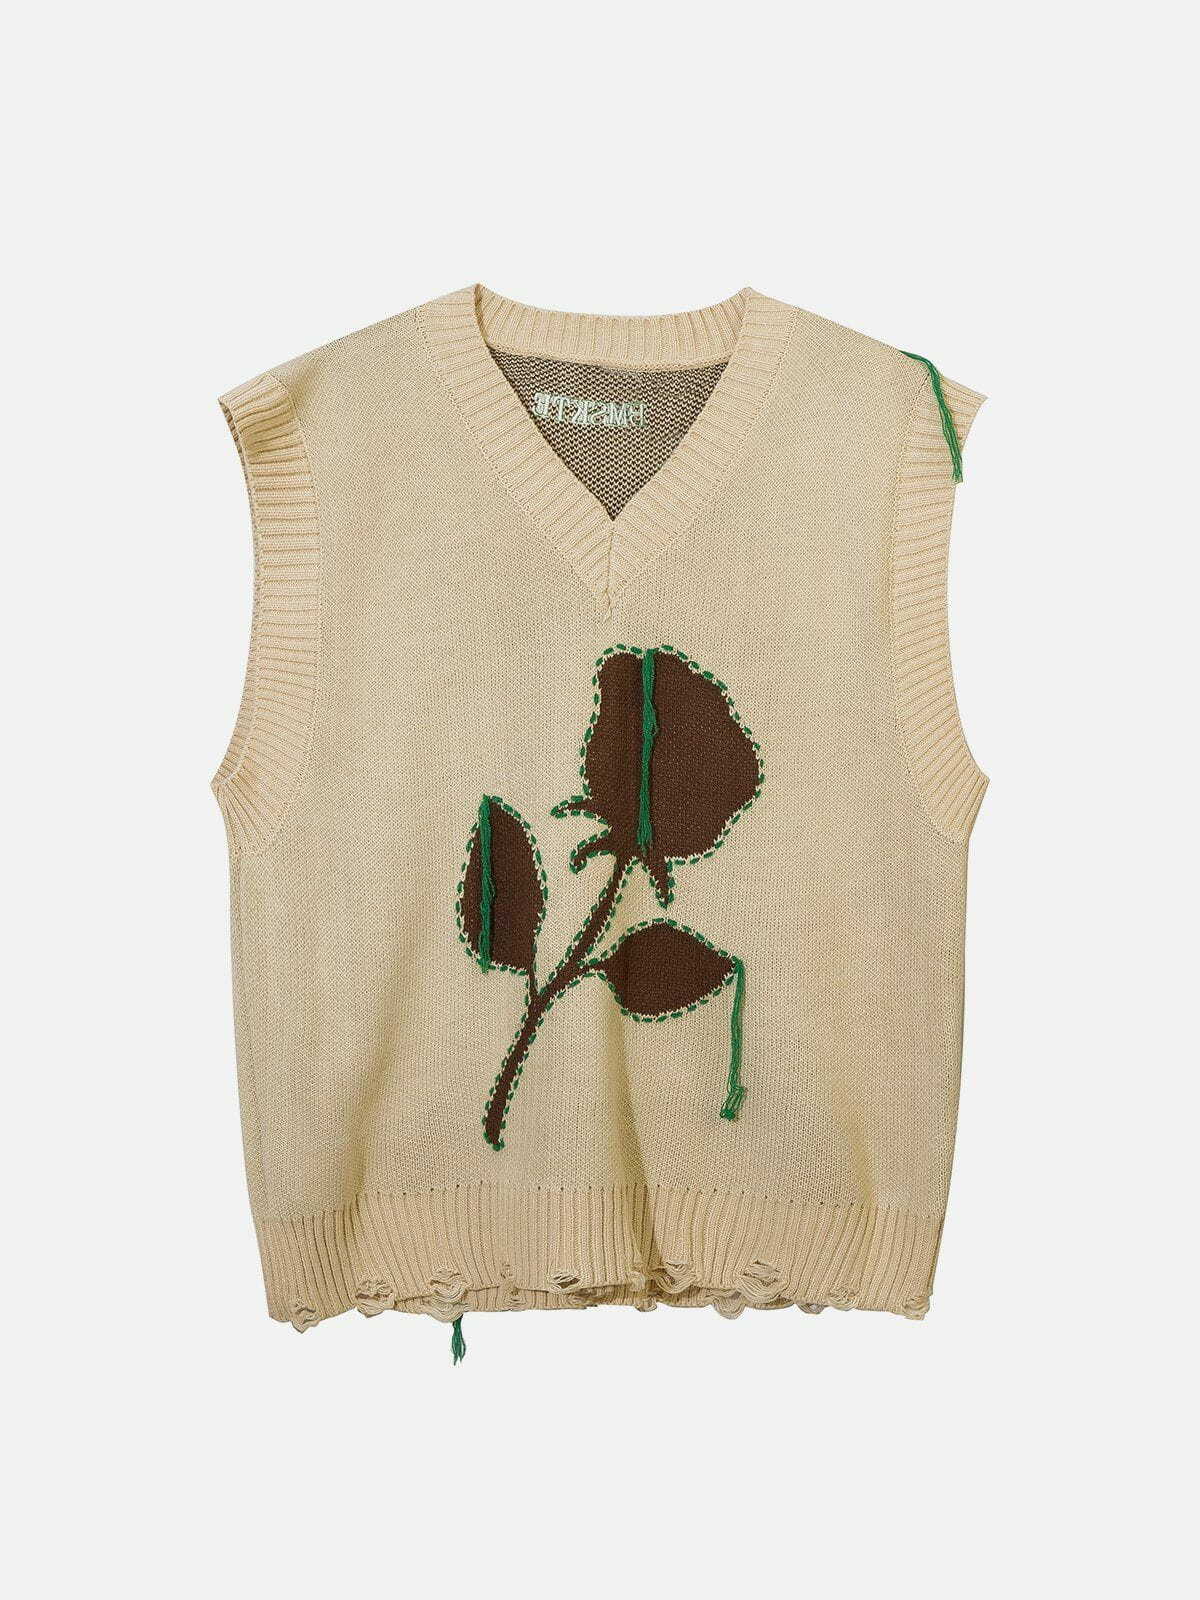 flower print sweater vest quirky y2k fashion essential 6643